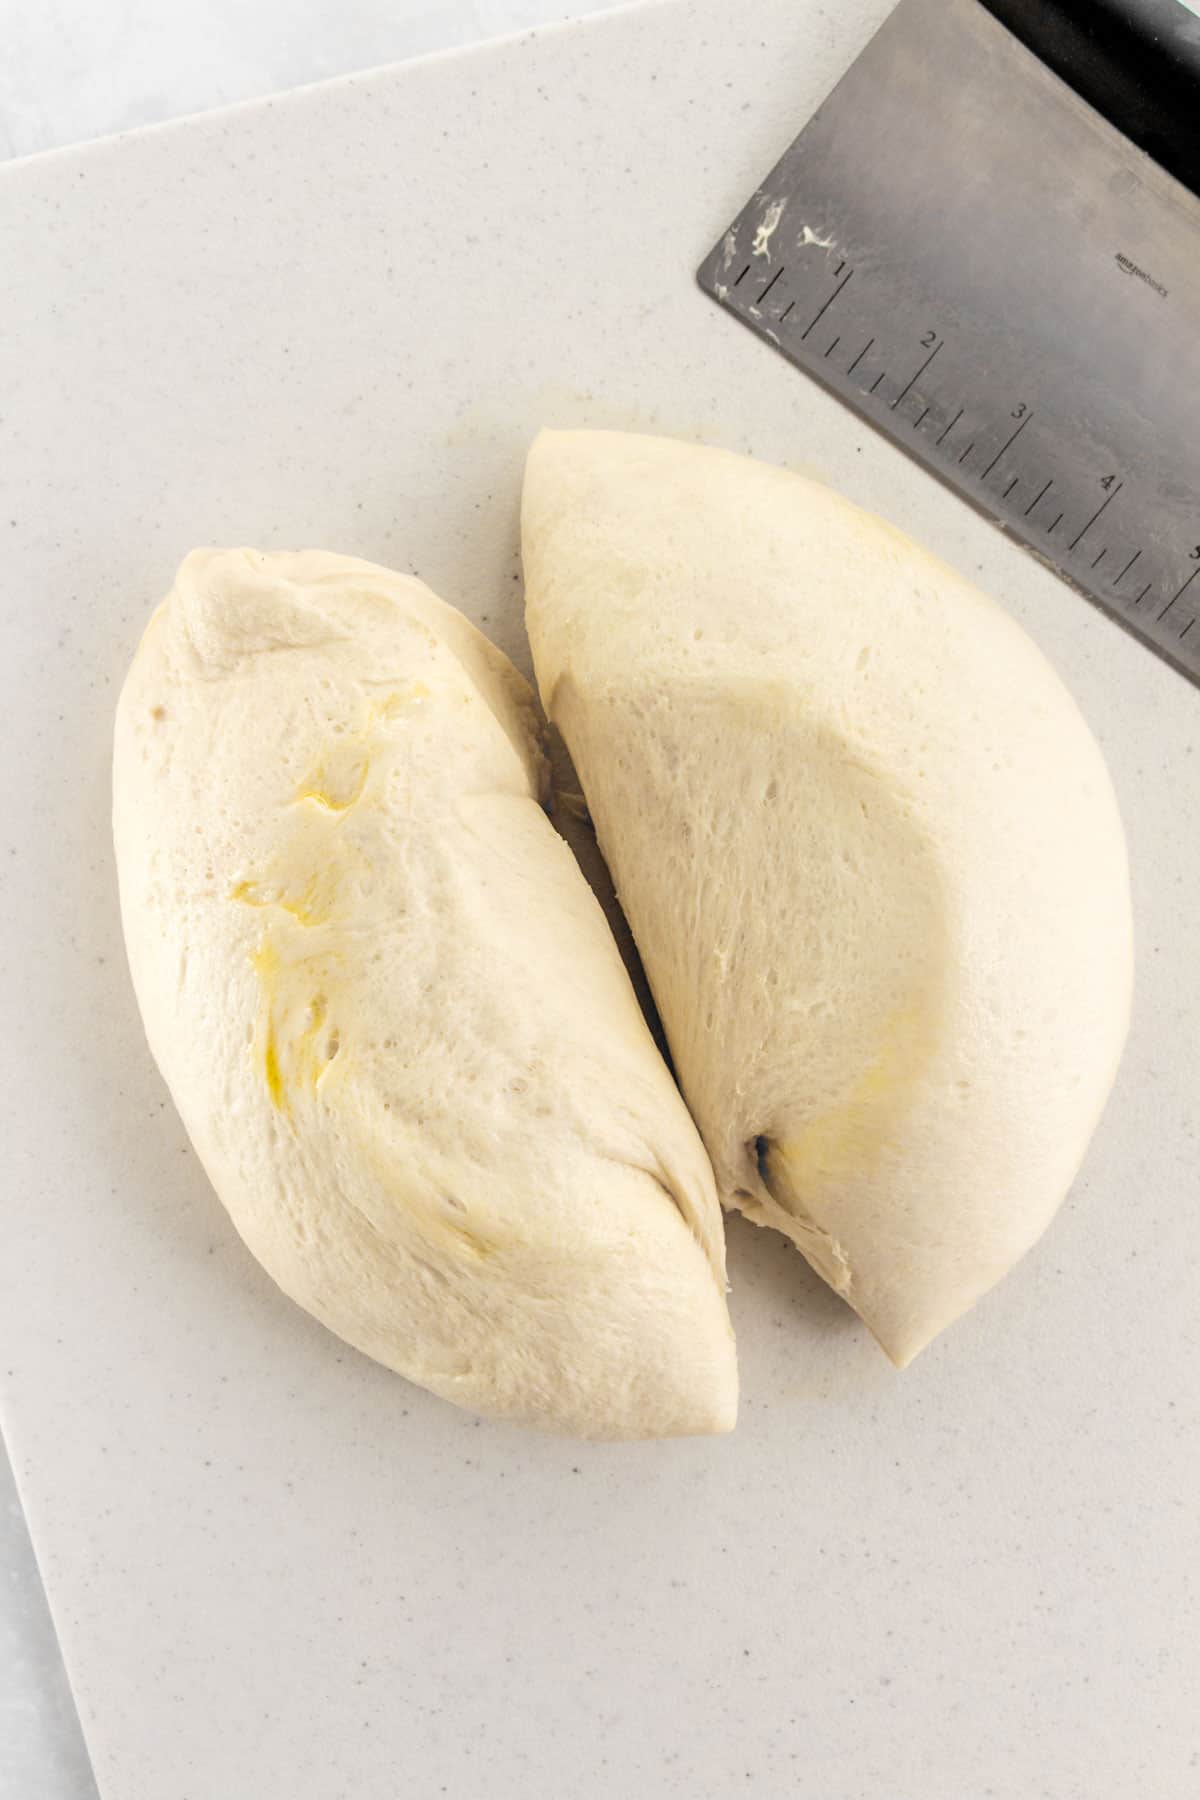 Scallion bread dough split in half.